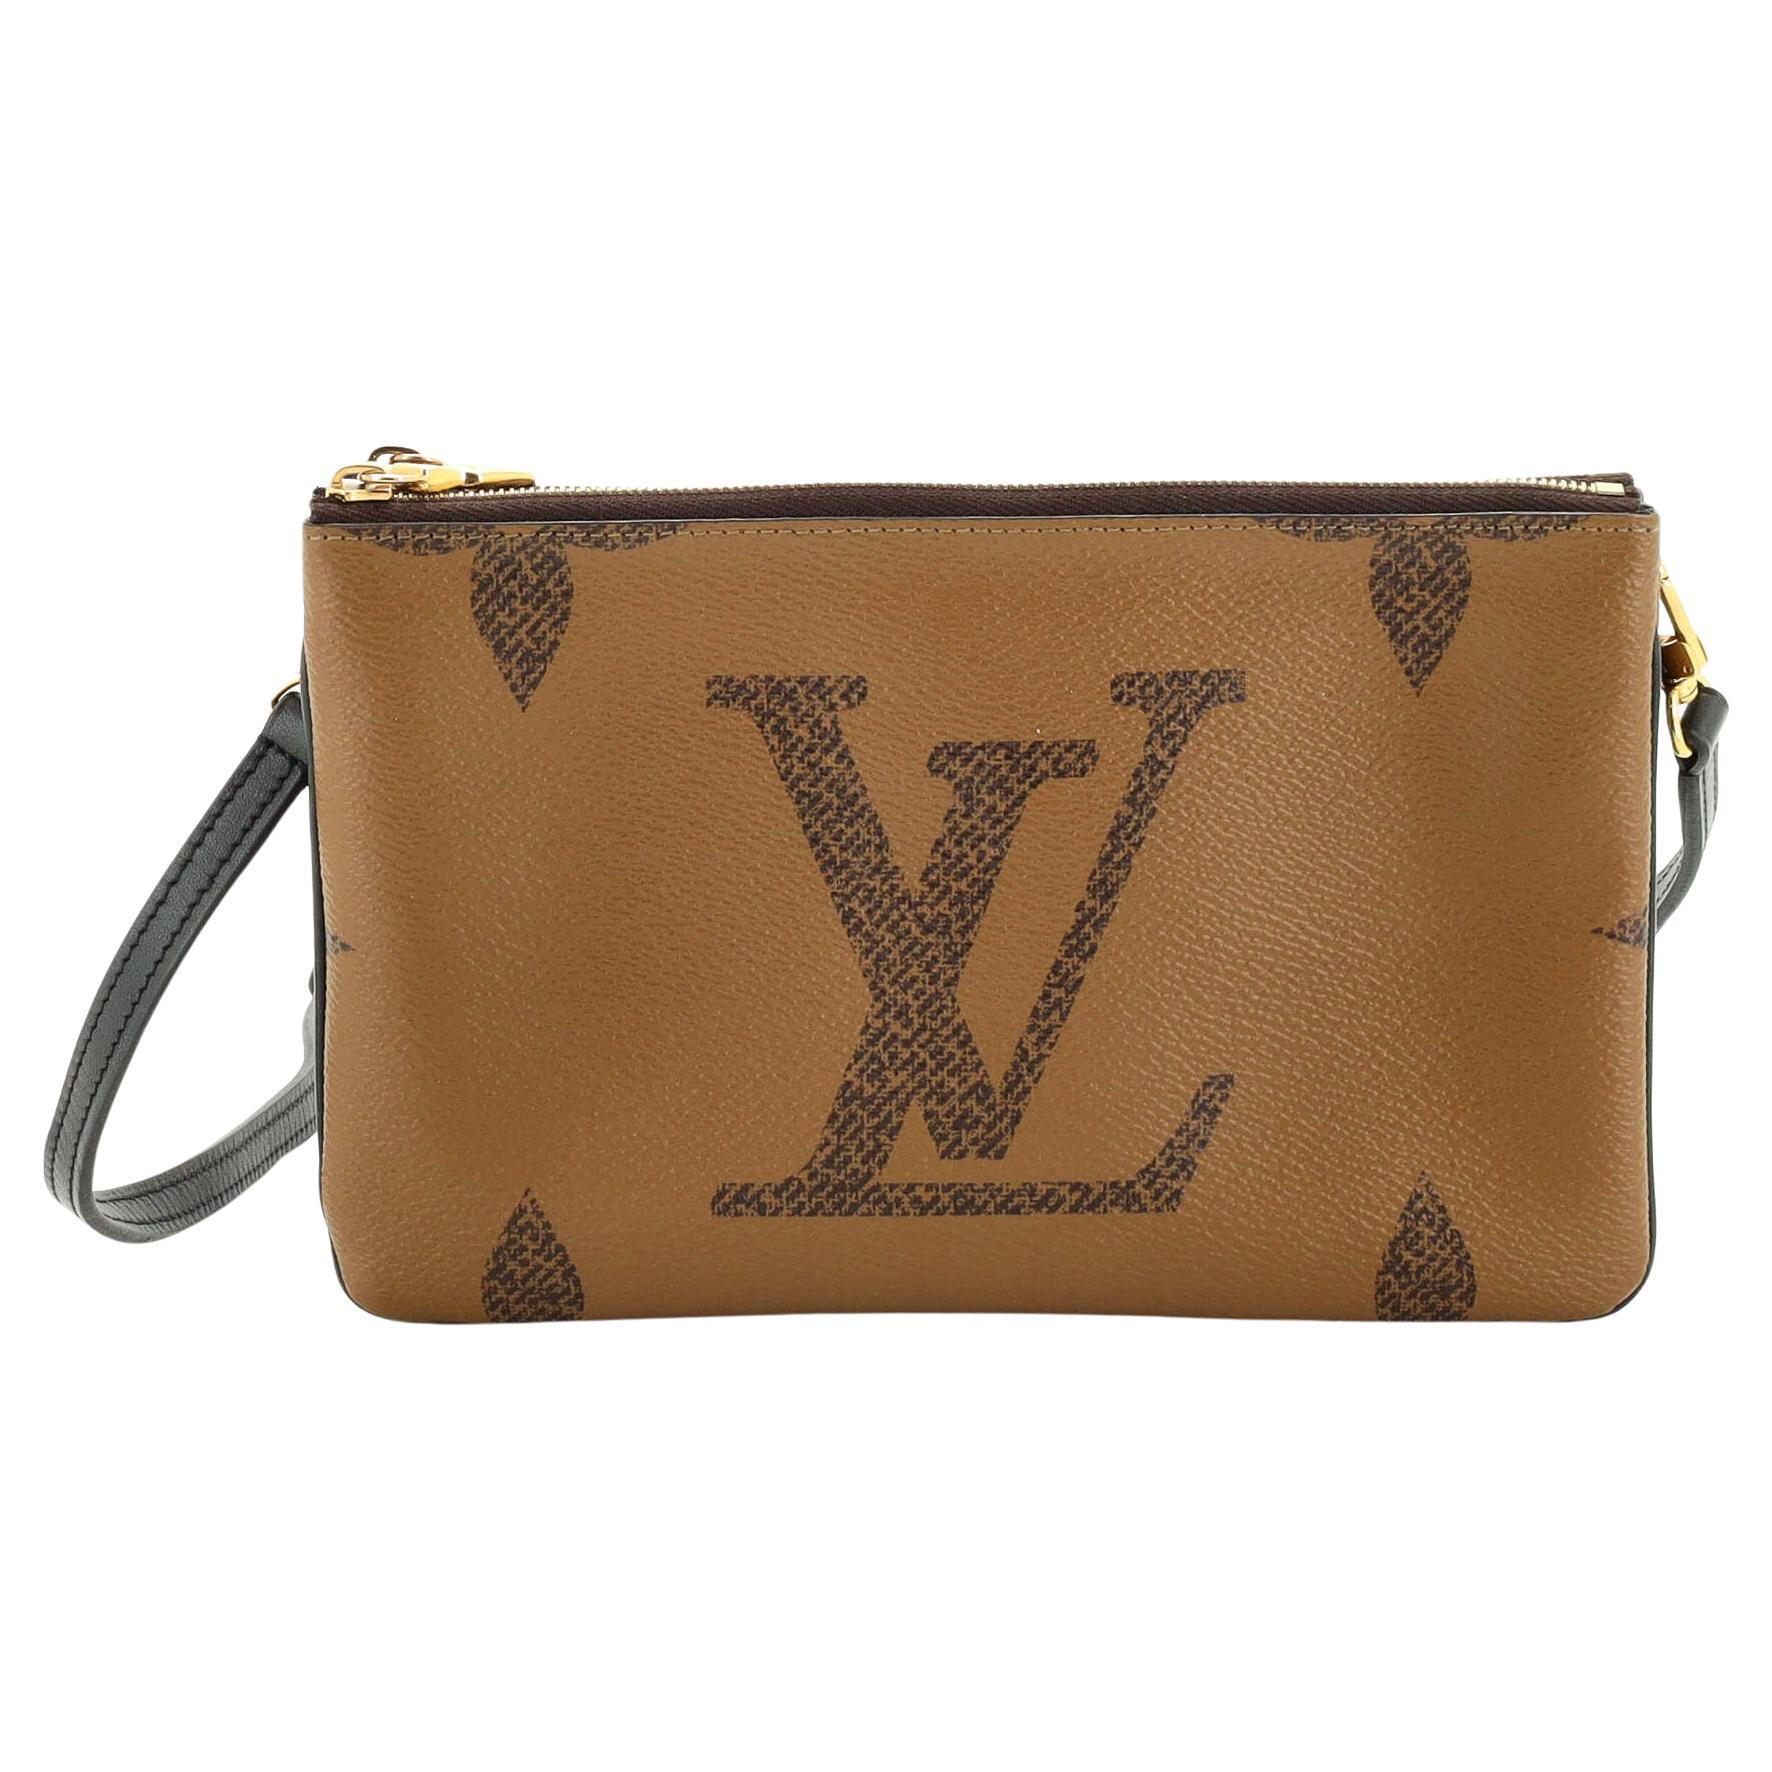 Louis Vuitton Scott Box - For Sale on 1stDibs